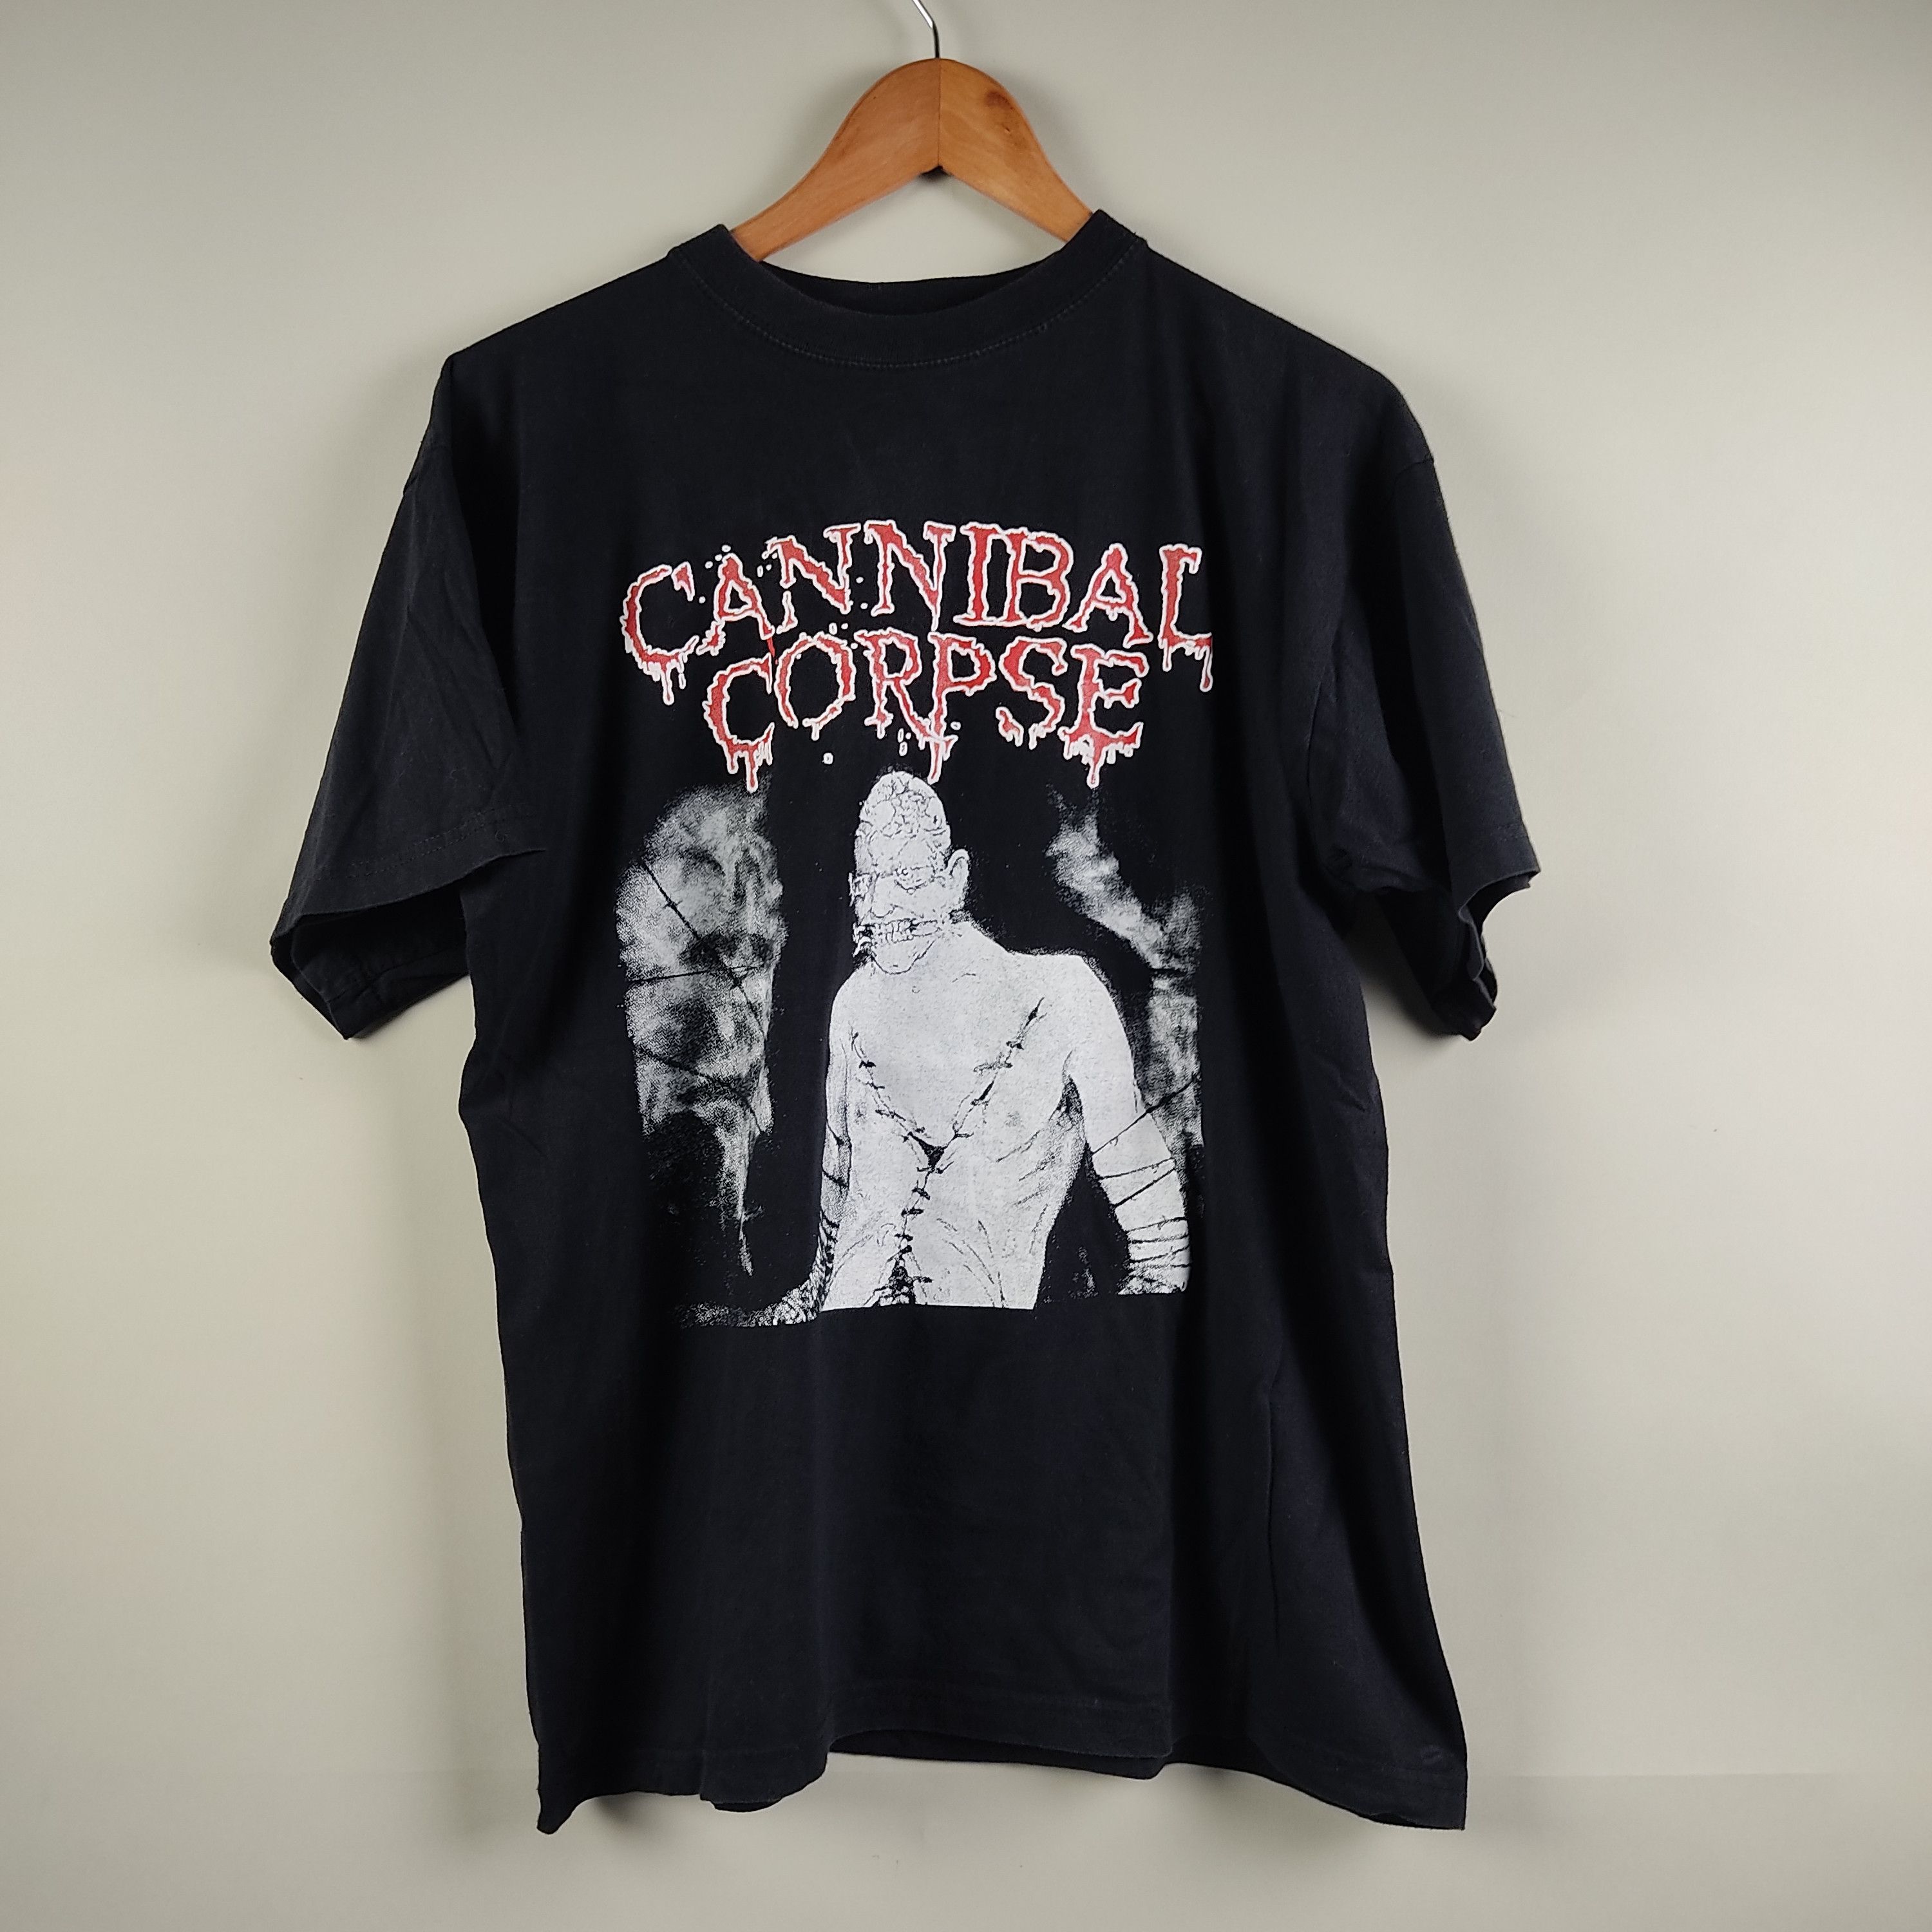 Cannibal Corpse Vile Shirt | Grailed